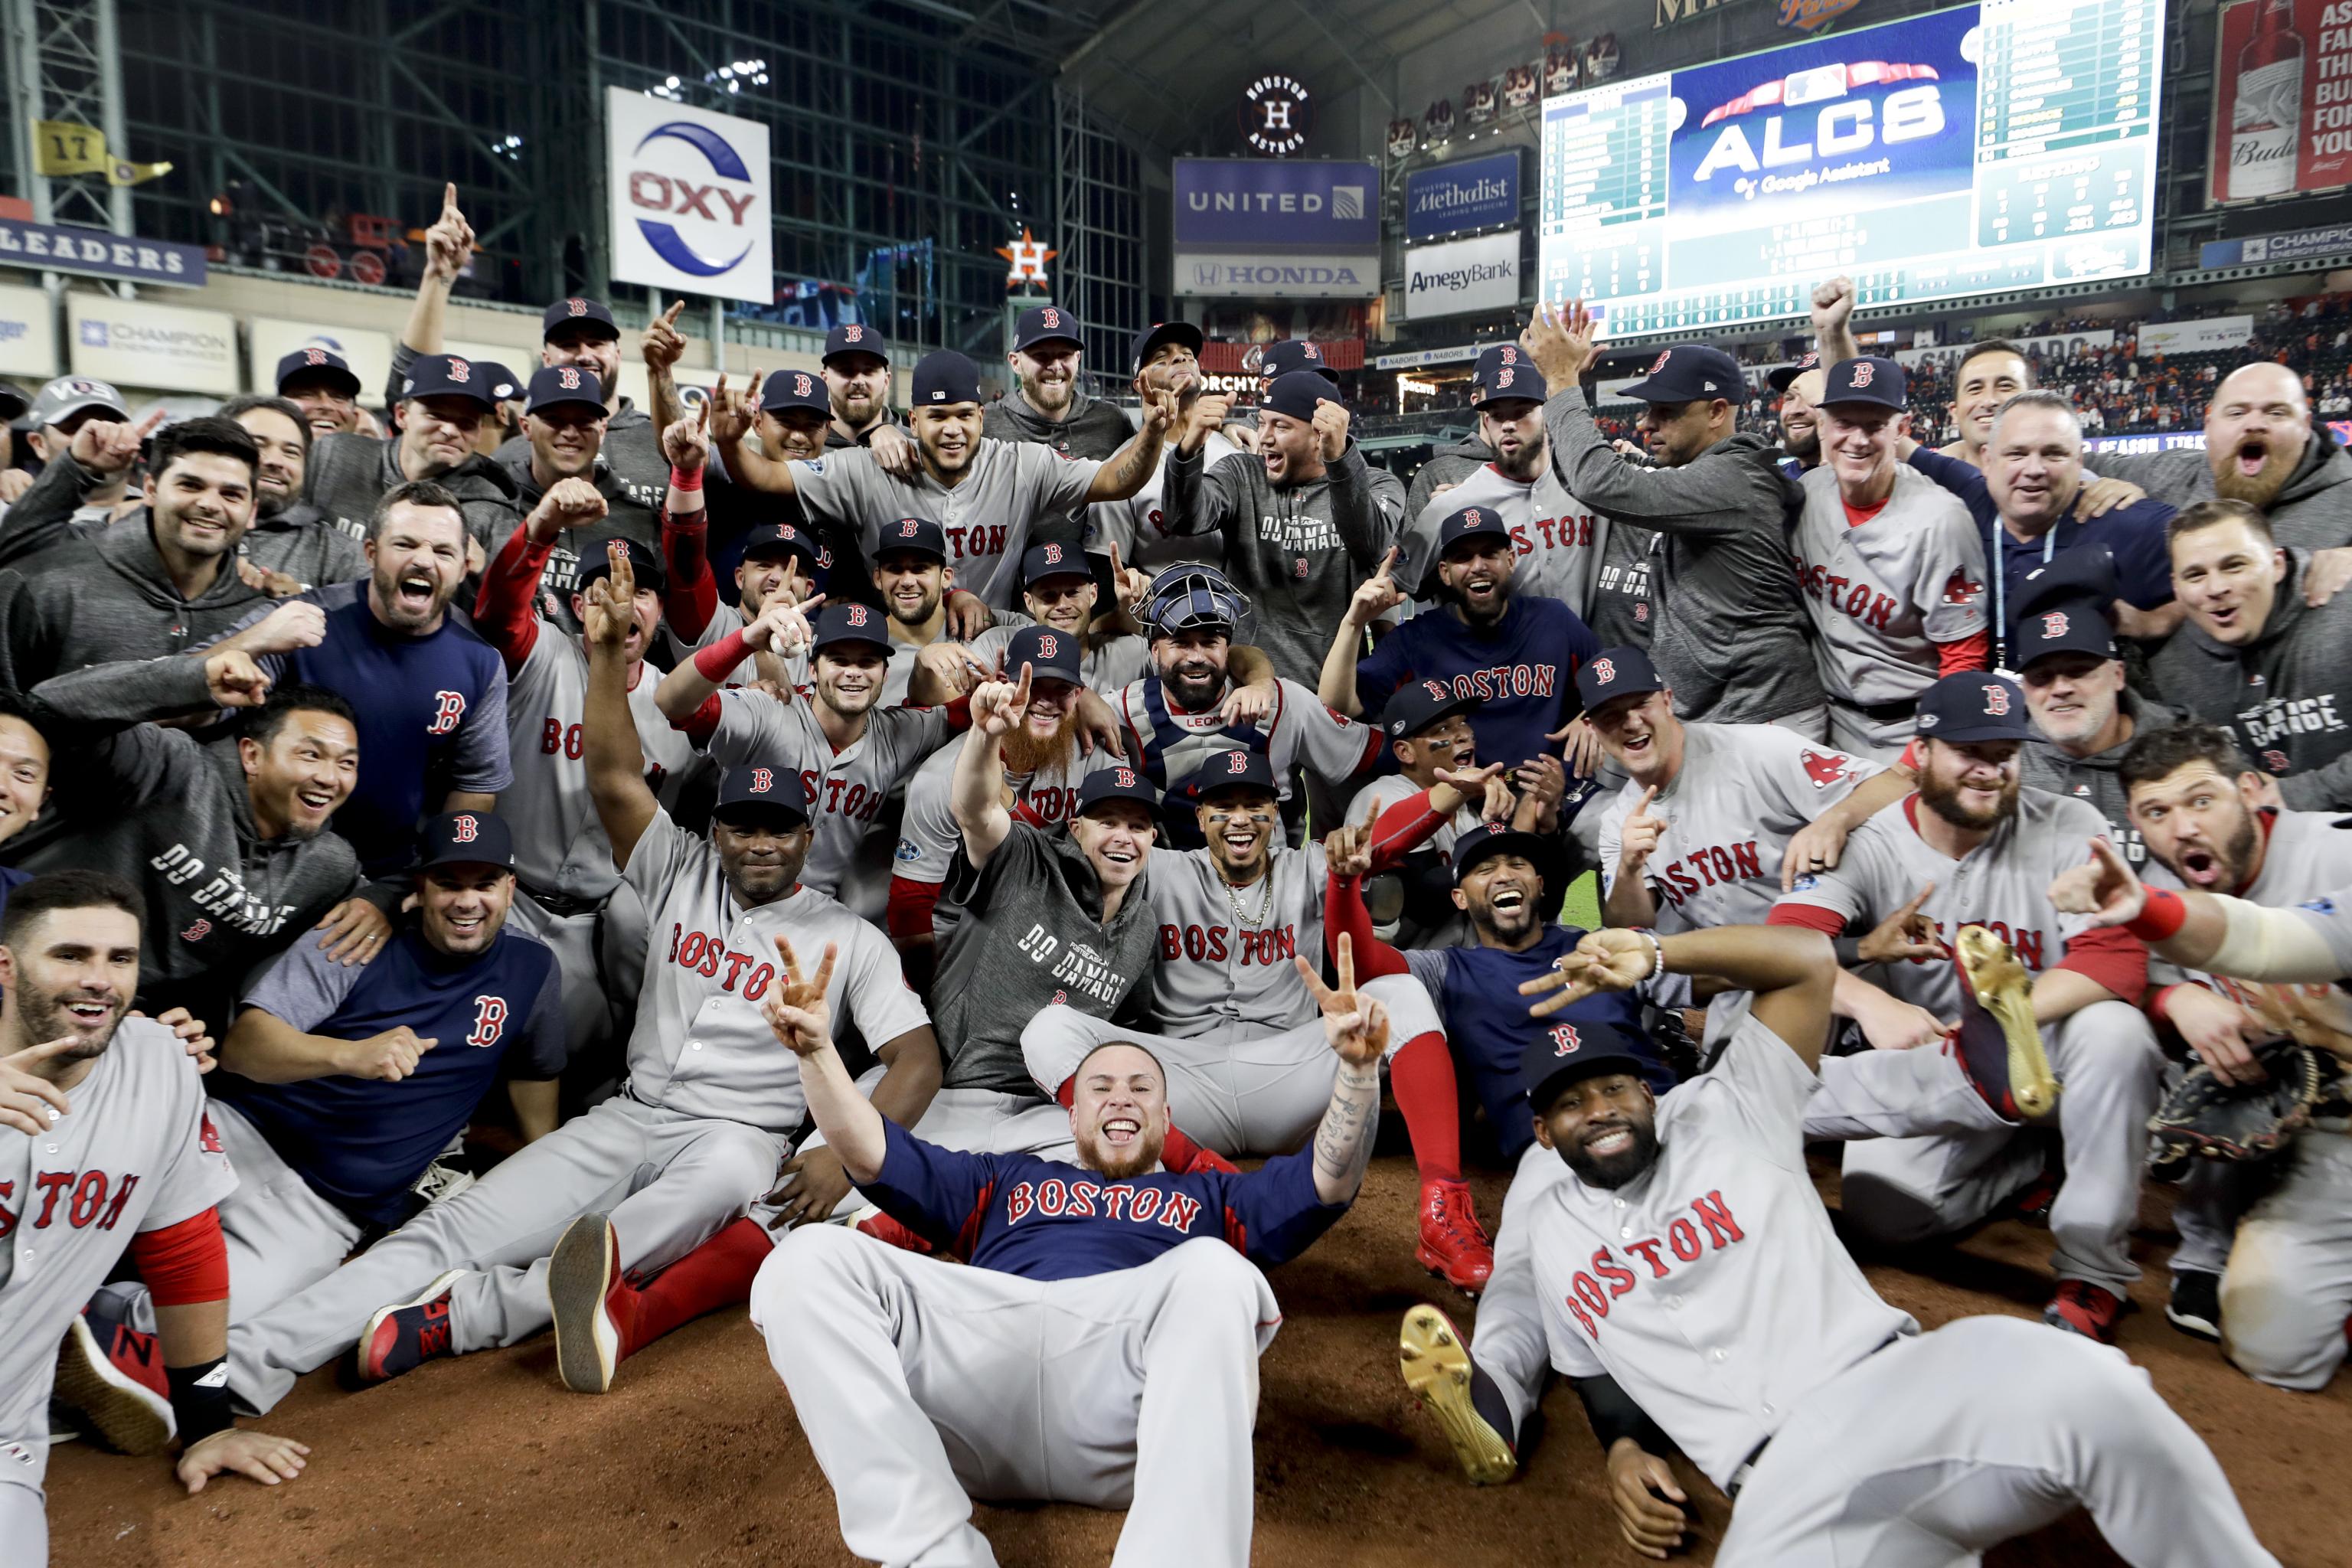 Bostons Best Boston Red Sox, 2018 World Series Champions Sports